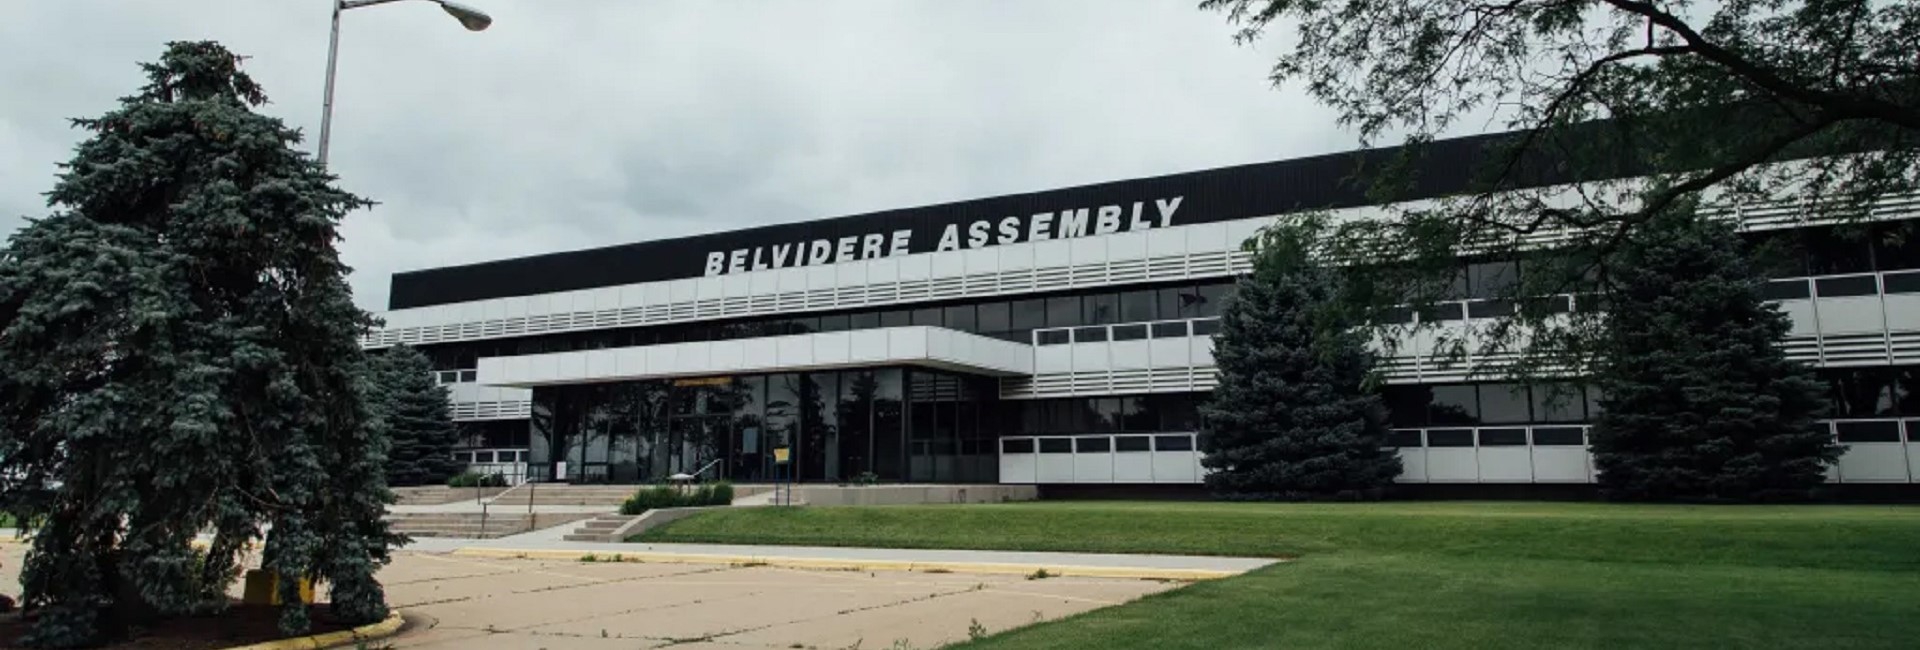 belvidere-assembly-plant